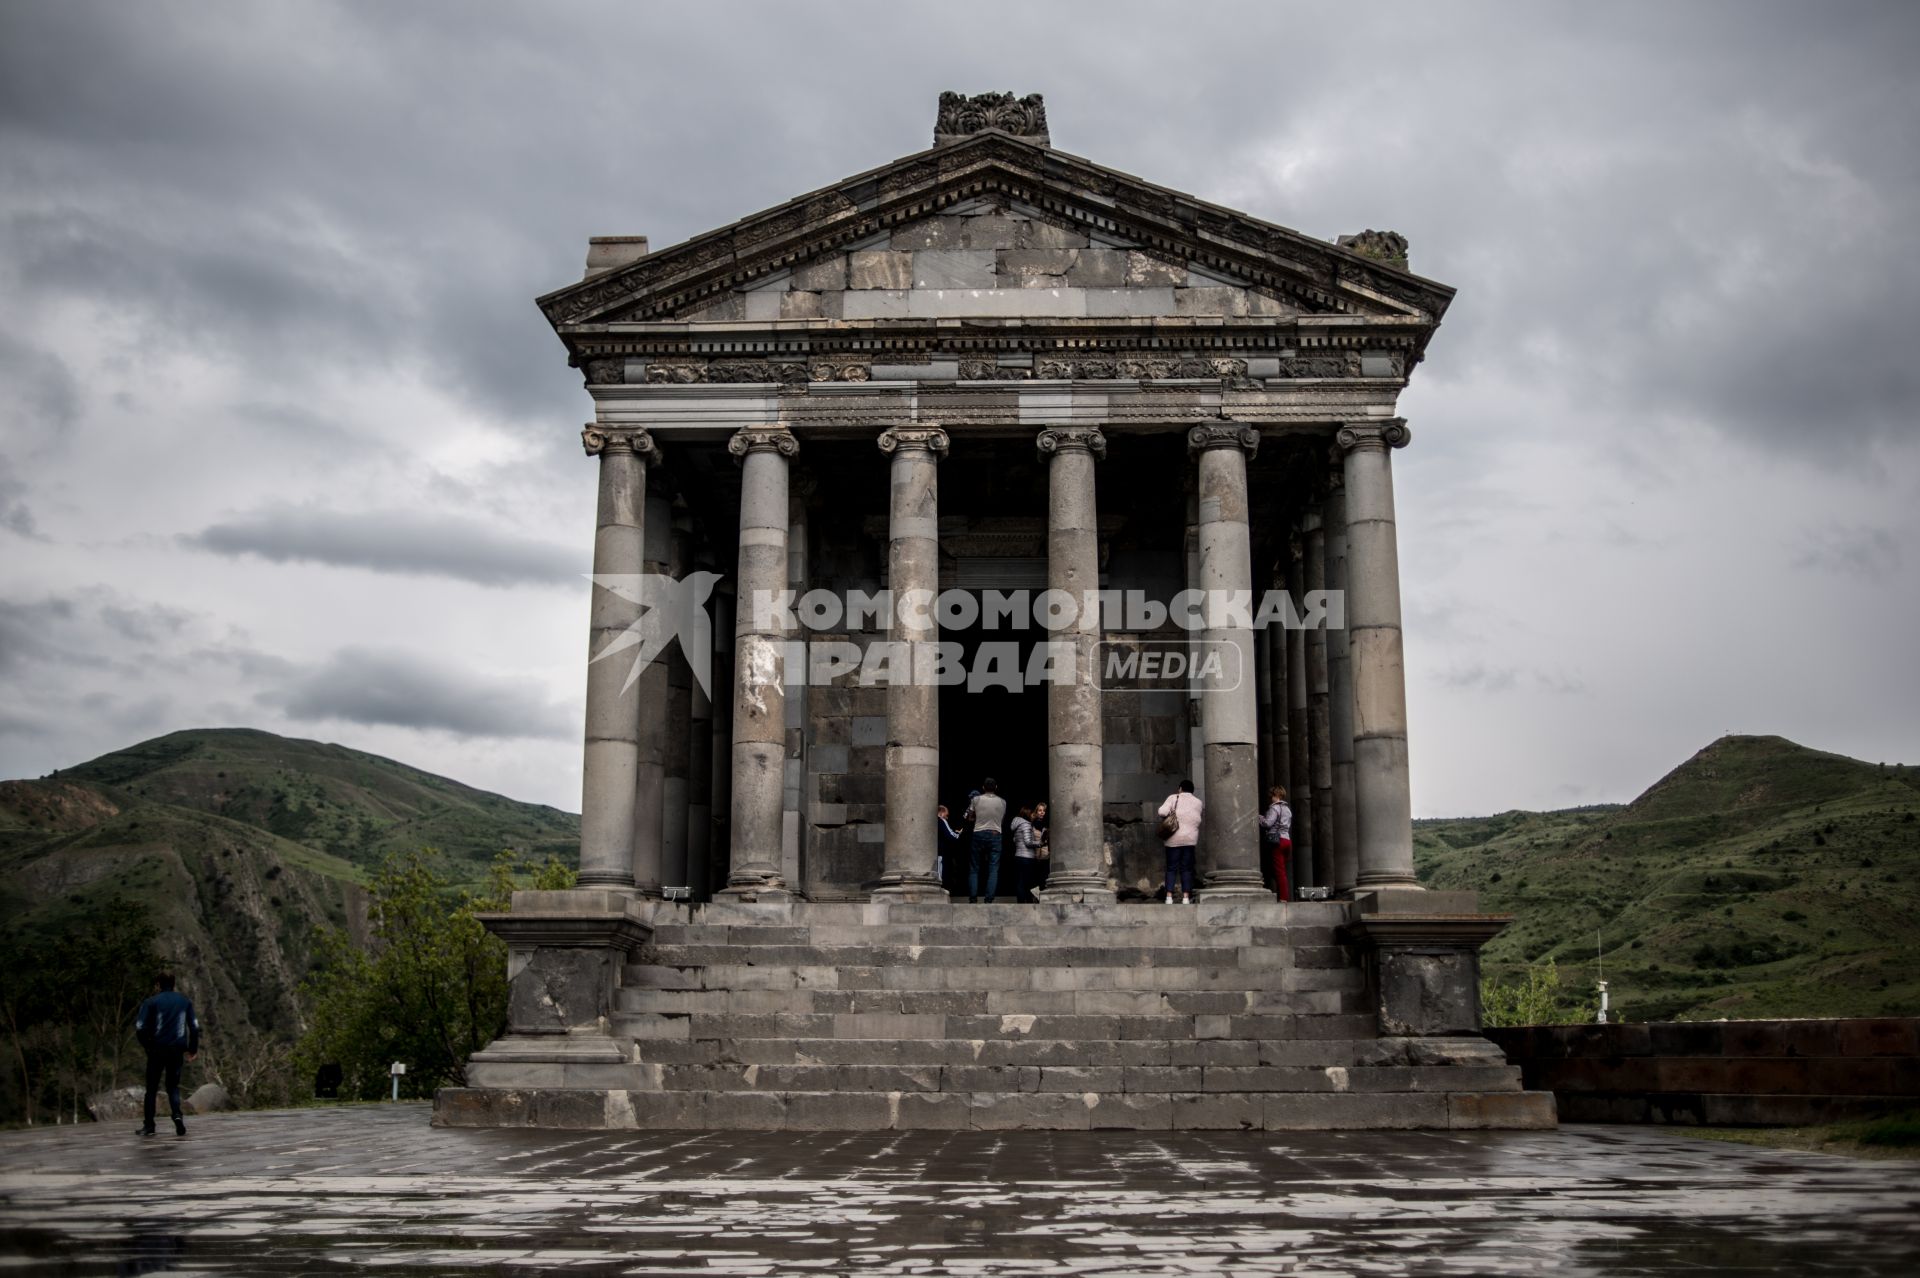 Армения, Гарни. Вид на языческий храм I в. н. э. недалеко от Еревана в Котайкской области, в долине реки Азат.